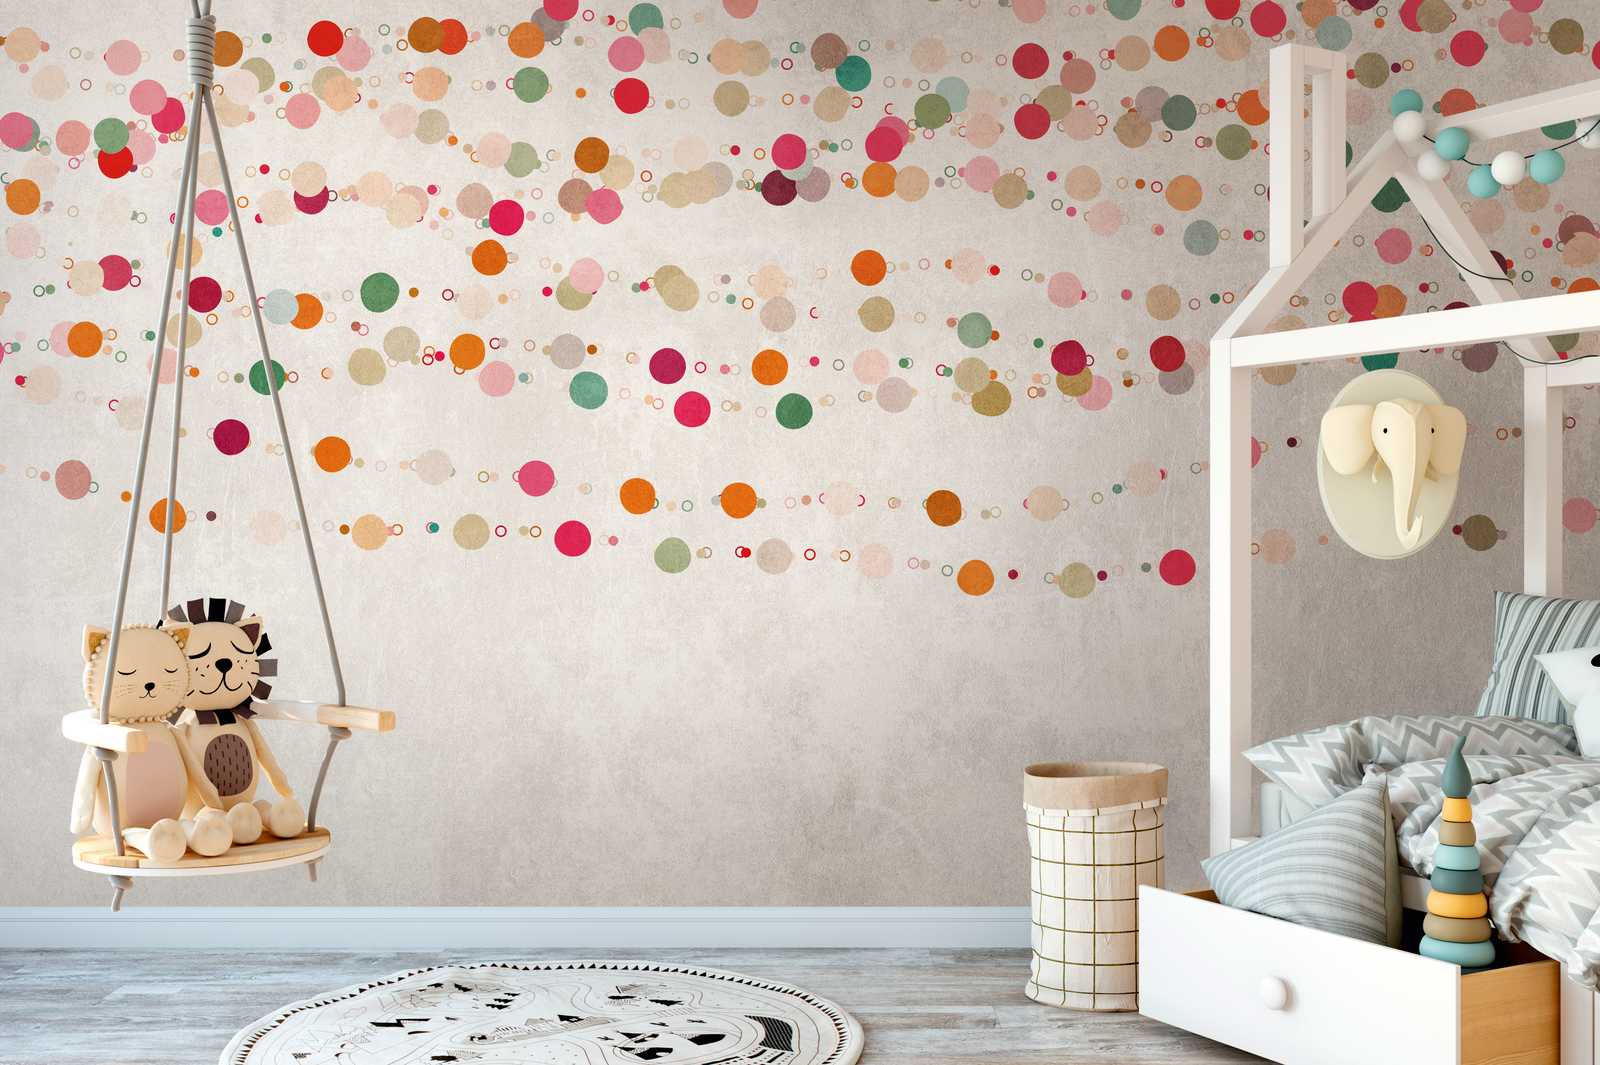             Wallpaper novelty | motif wallpaper with plaster wall motif with garlands pattern
        